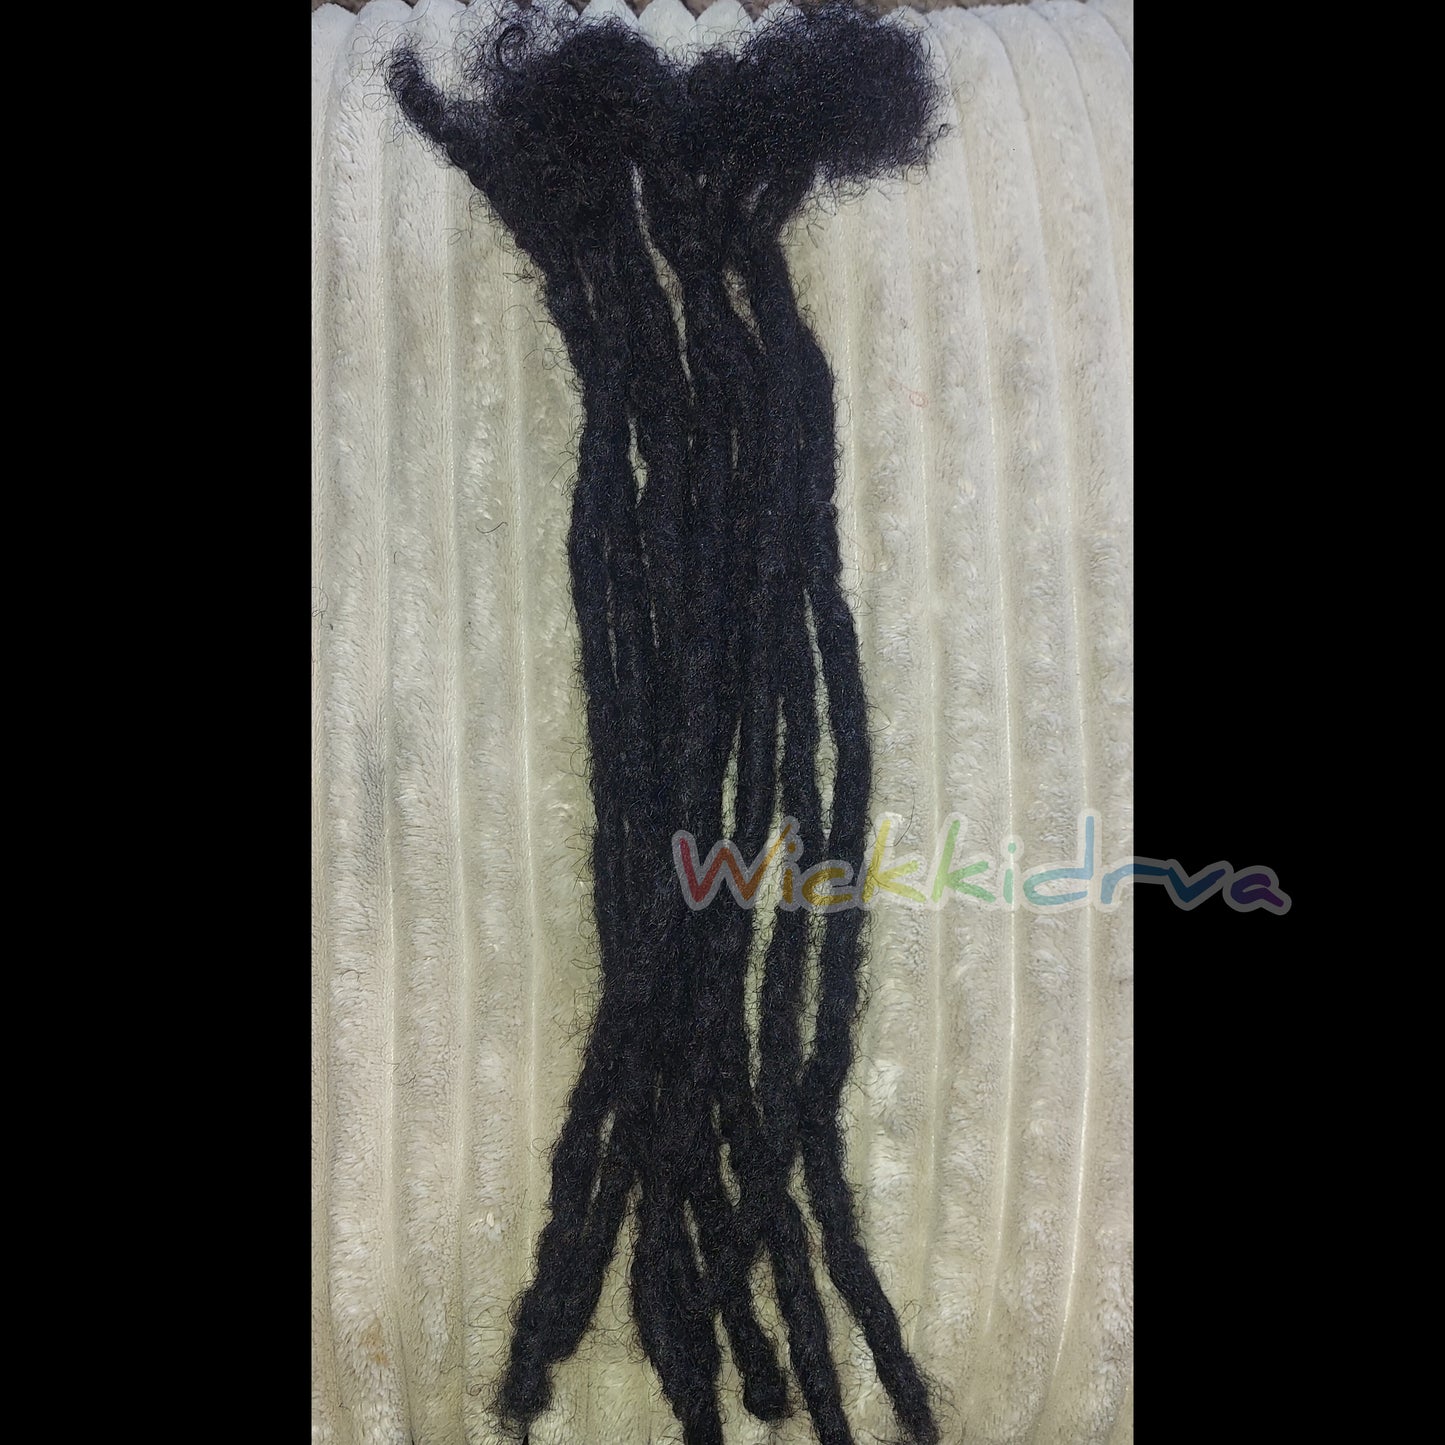 16in Handmade 100% Human Hair Loc Extensions | WickKidRva